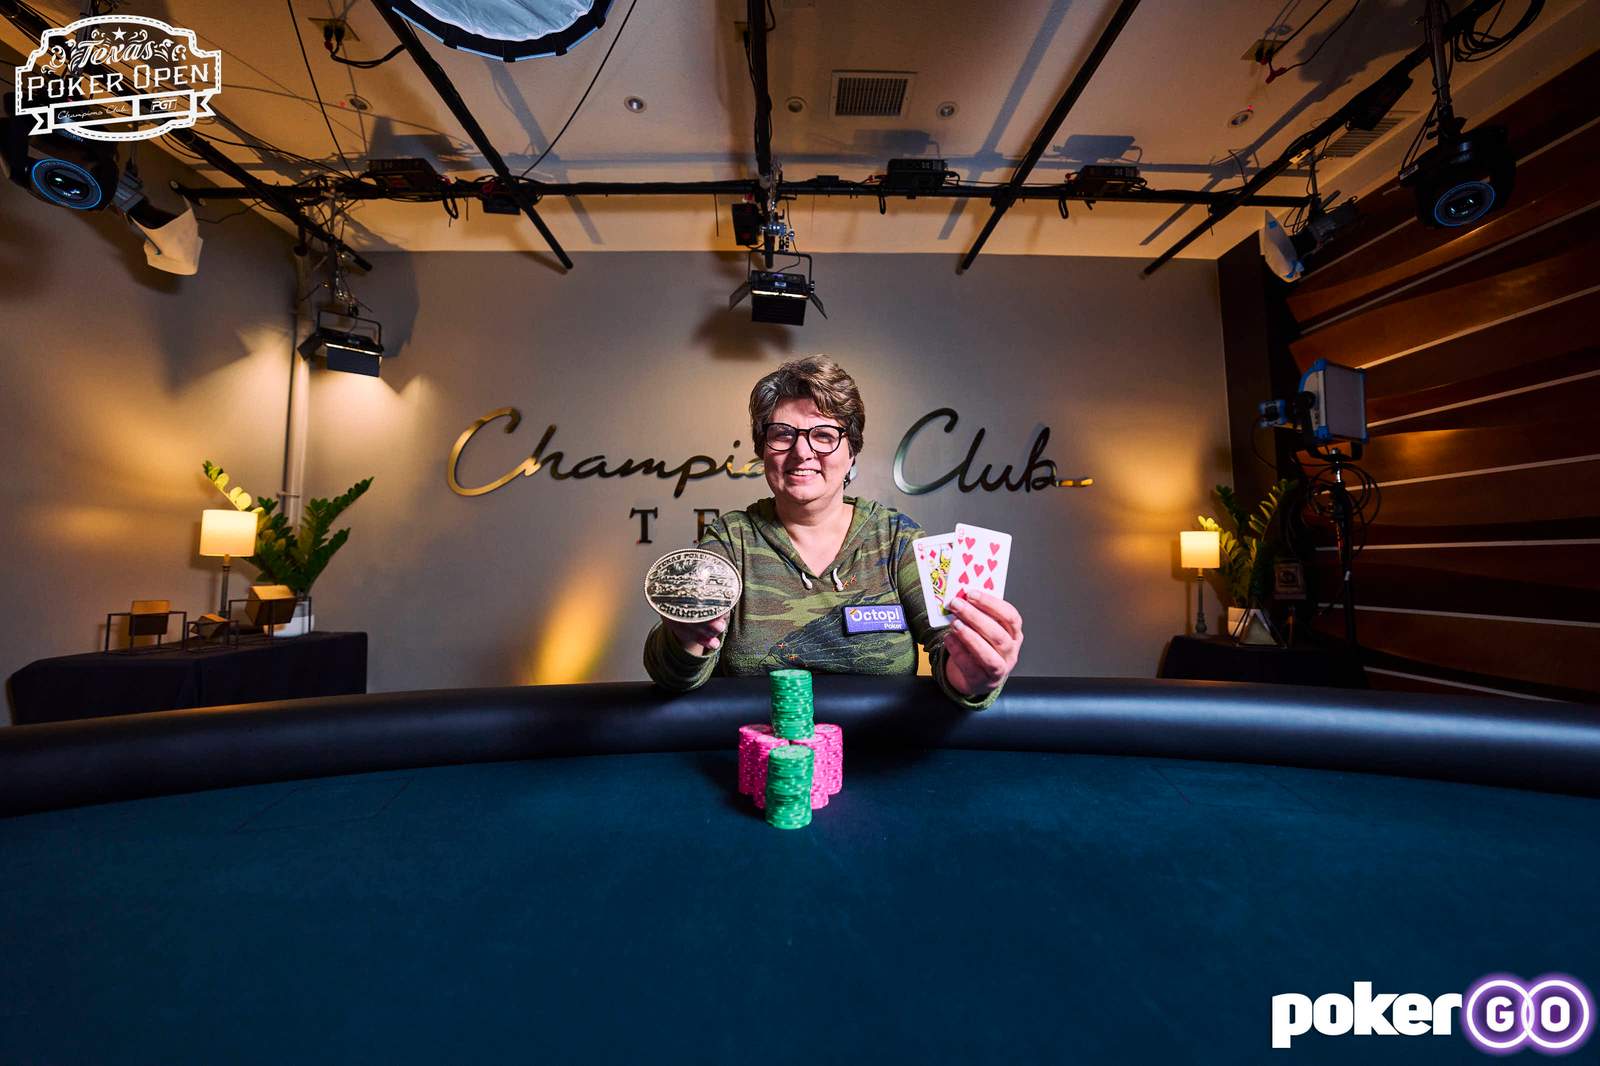 Victoria Livschitz Wins Texas Poker Open High Roller for $45,500